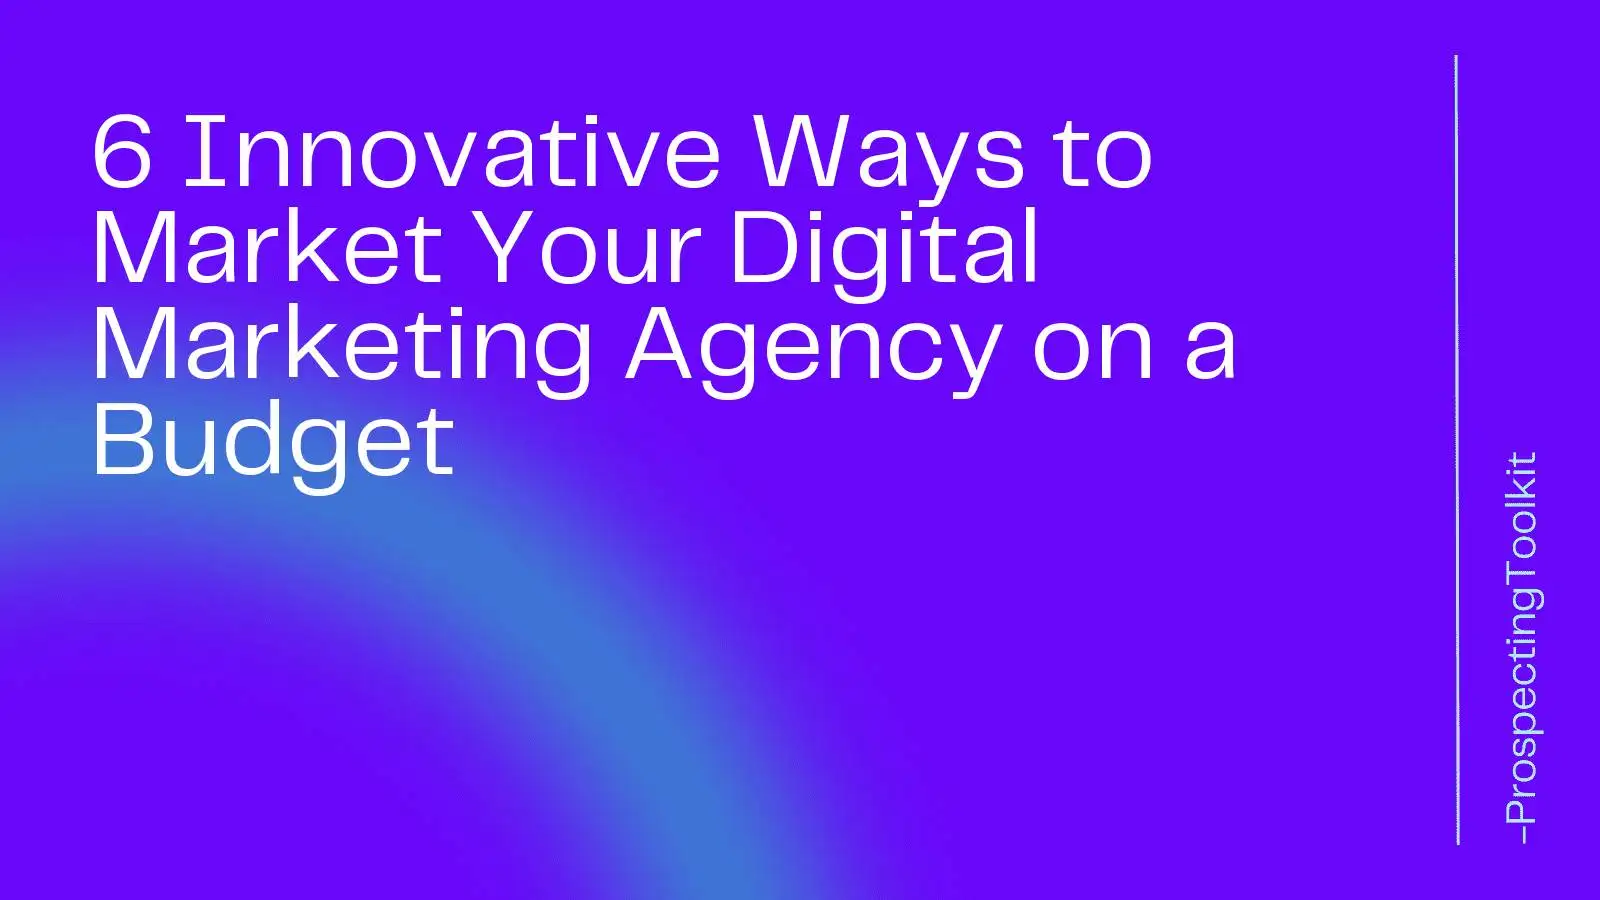 6 Innovative Ways to Market Your Digital Marketing Agency on a Budget